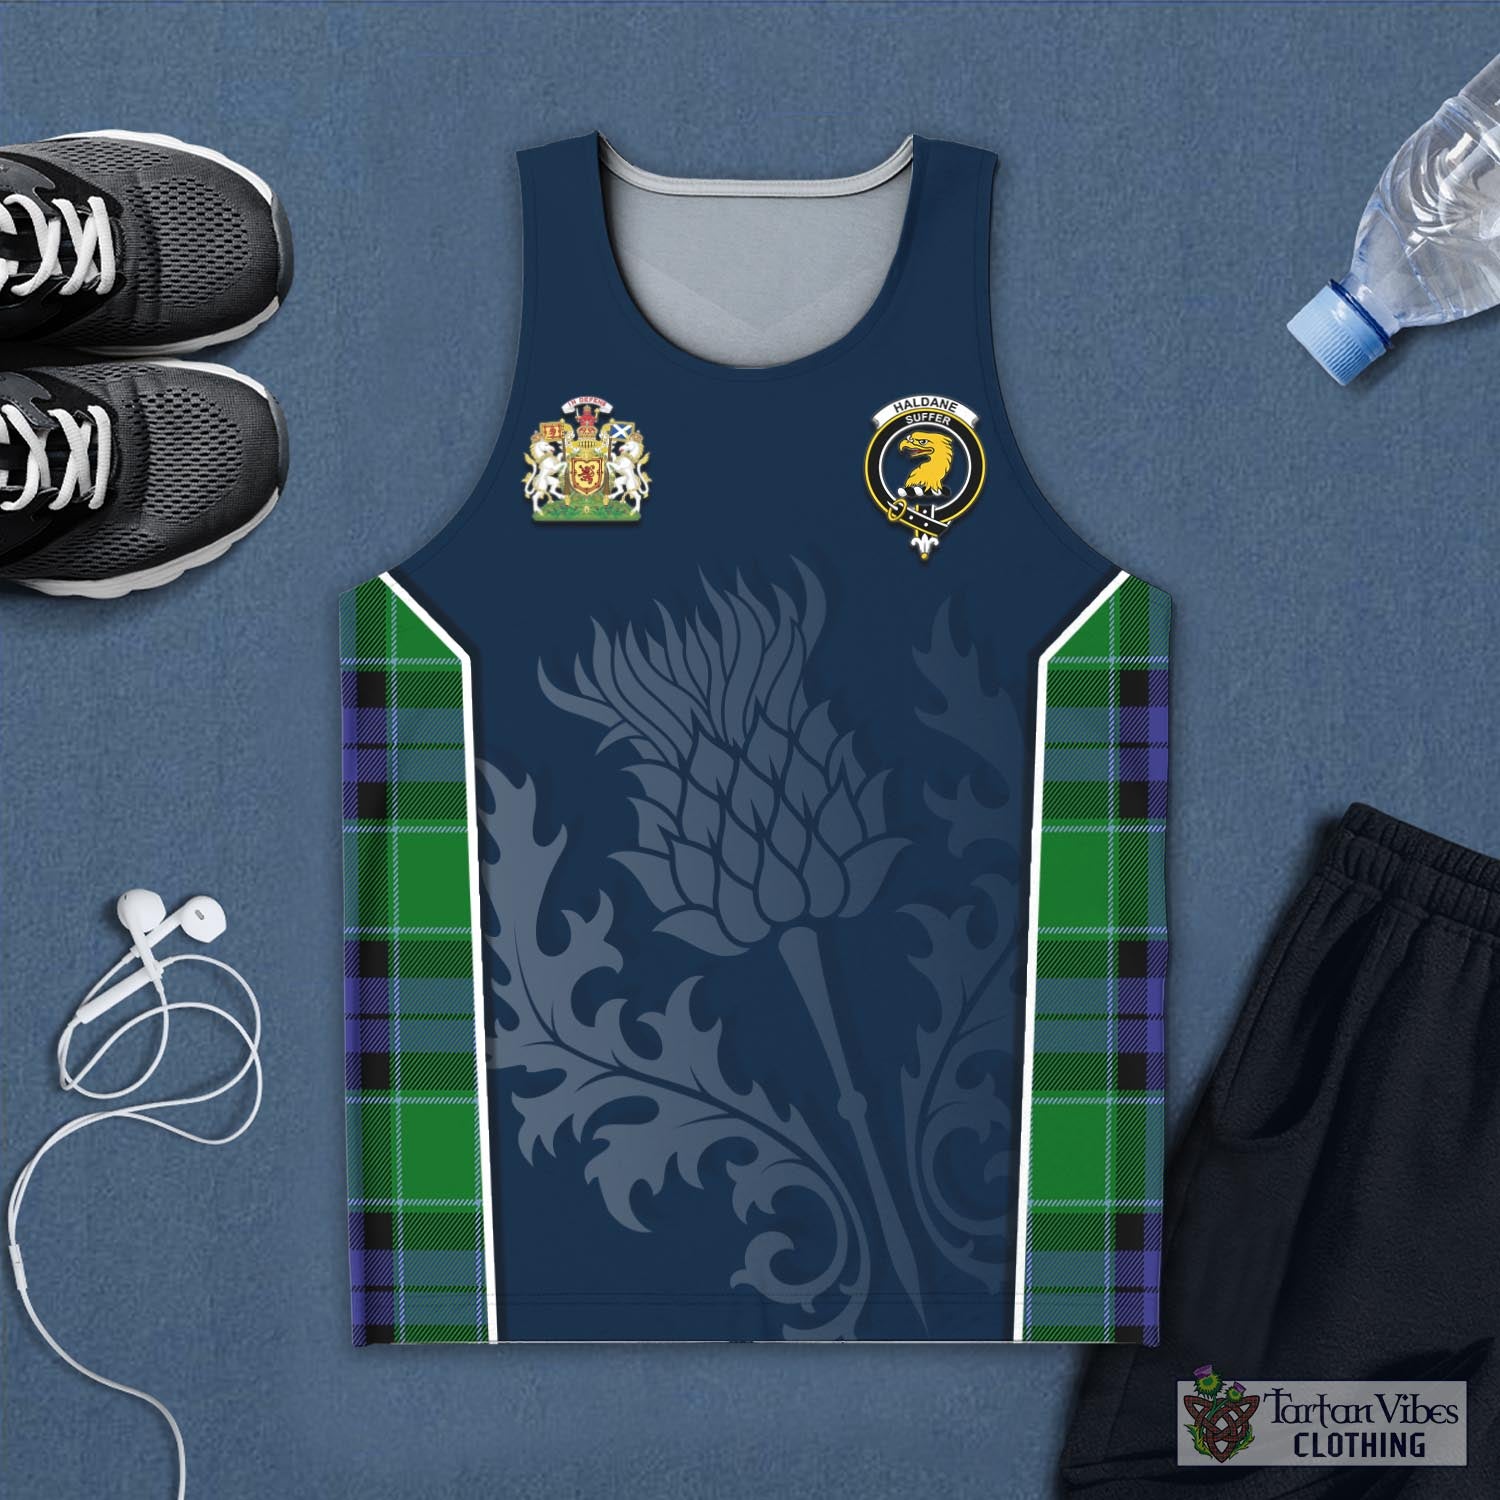 Tartan Vibes Clothing Haldane Tartan Men's Tanks Top with Family Crest and Scottish Thistle Vibes Sport Style